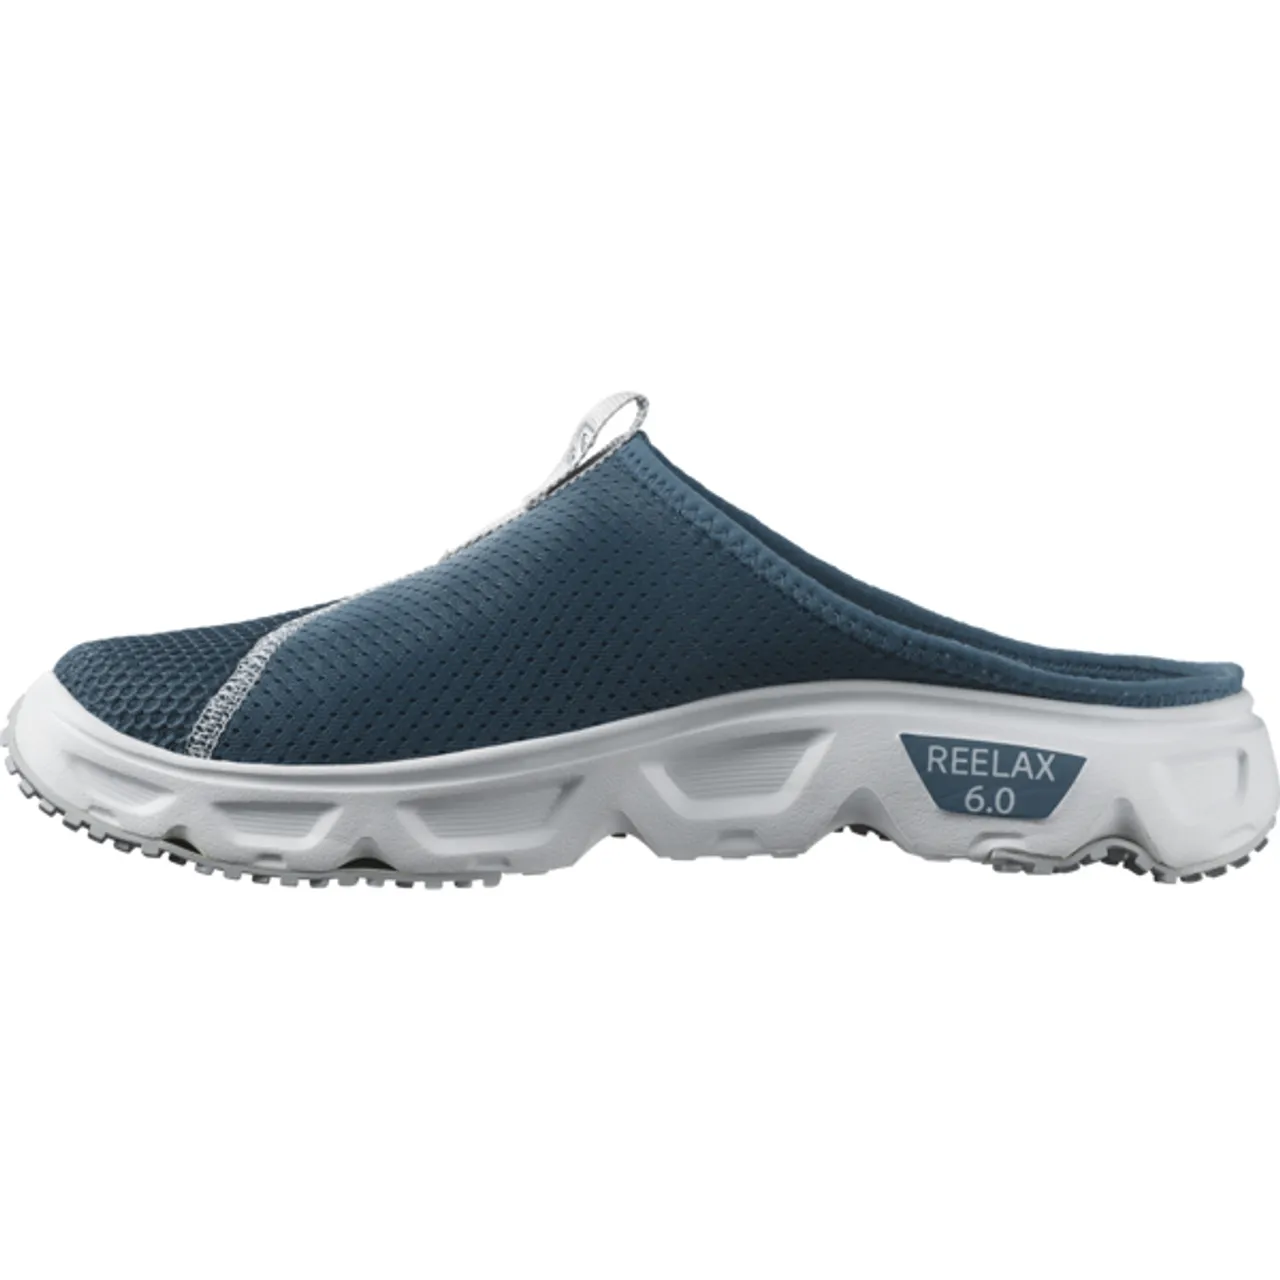 Badesandale SALOMON "REELAX SLIDE 6.0" Gr. 42, blau (rauchblau) Schuhe Clog Stoffschuhe